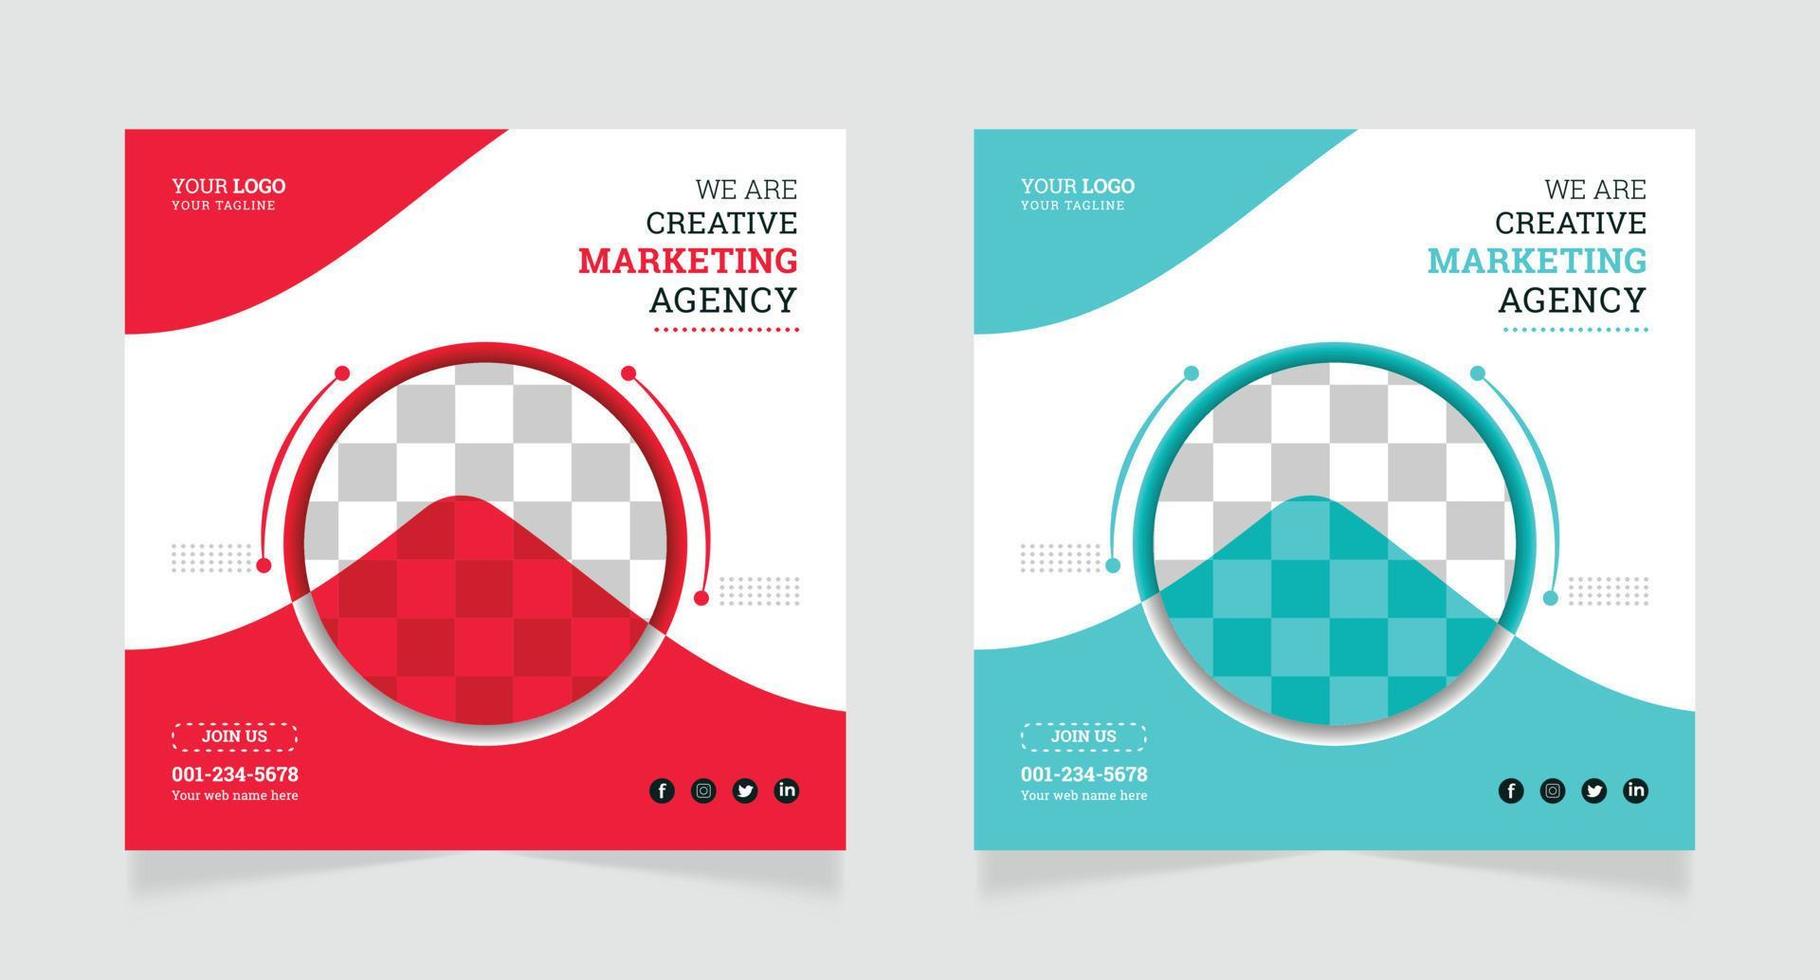 Digital marketing agency social media and instagram post design template vector